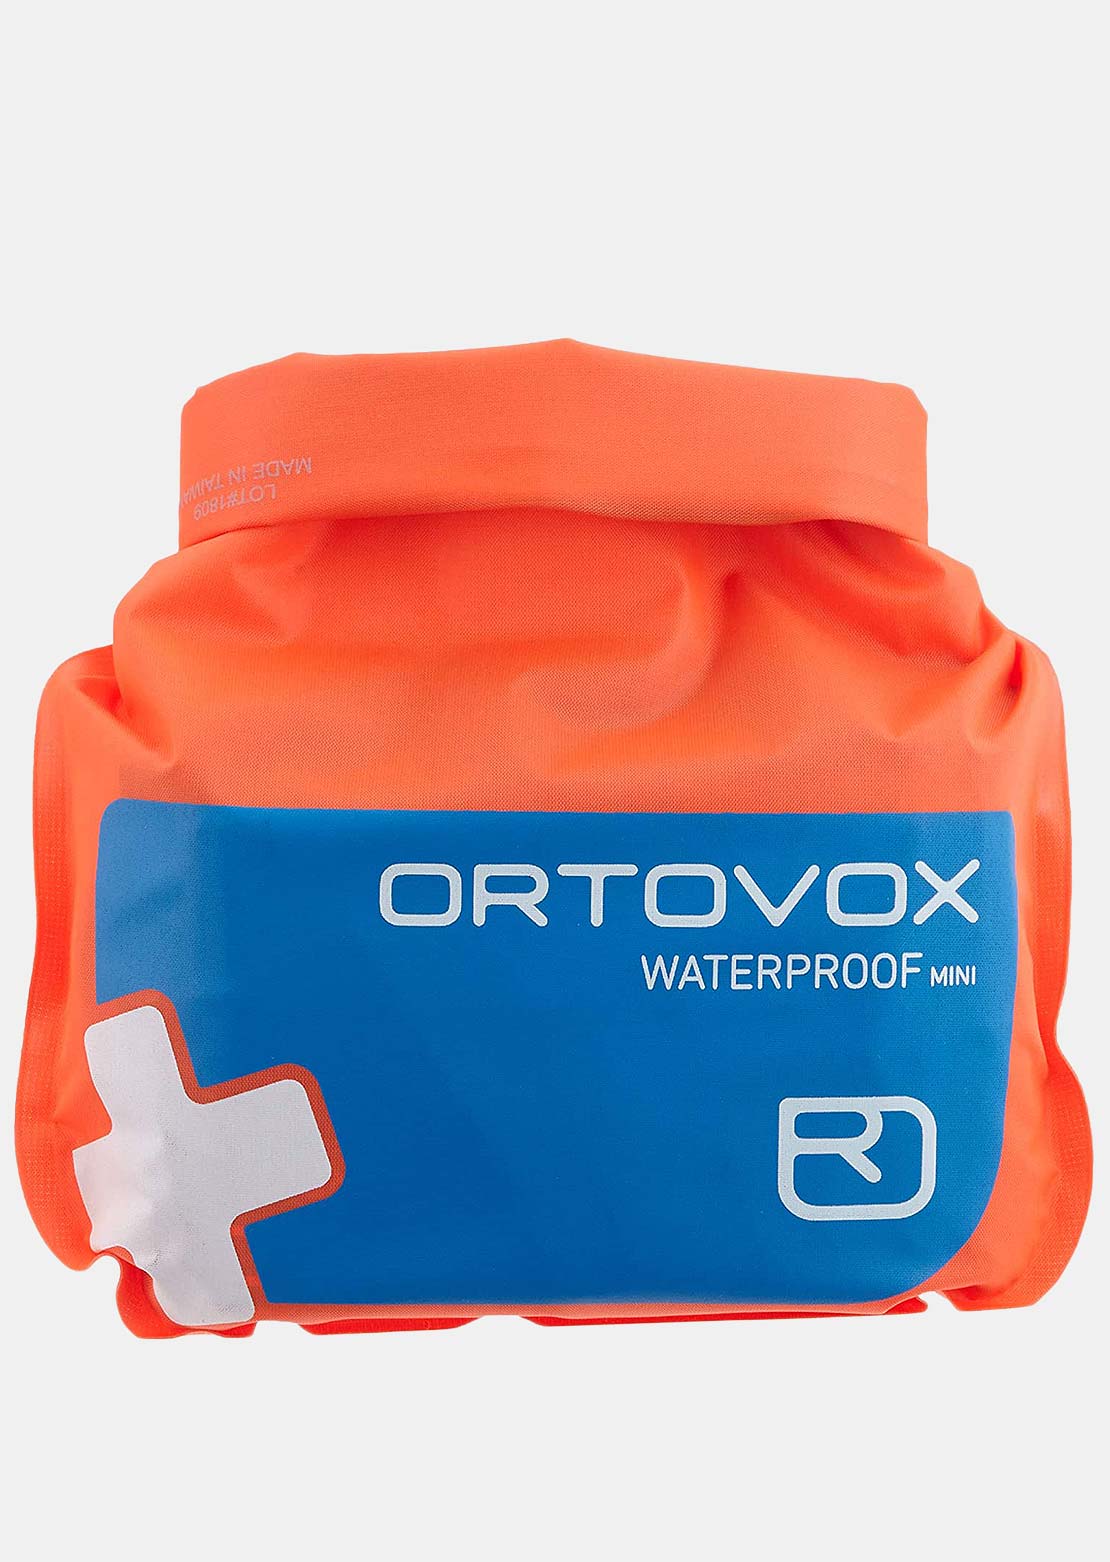 Ortovox First Aid Waterproof Mini Shocking Orange